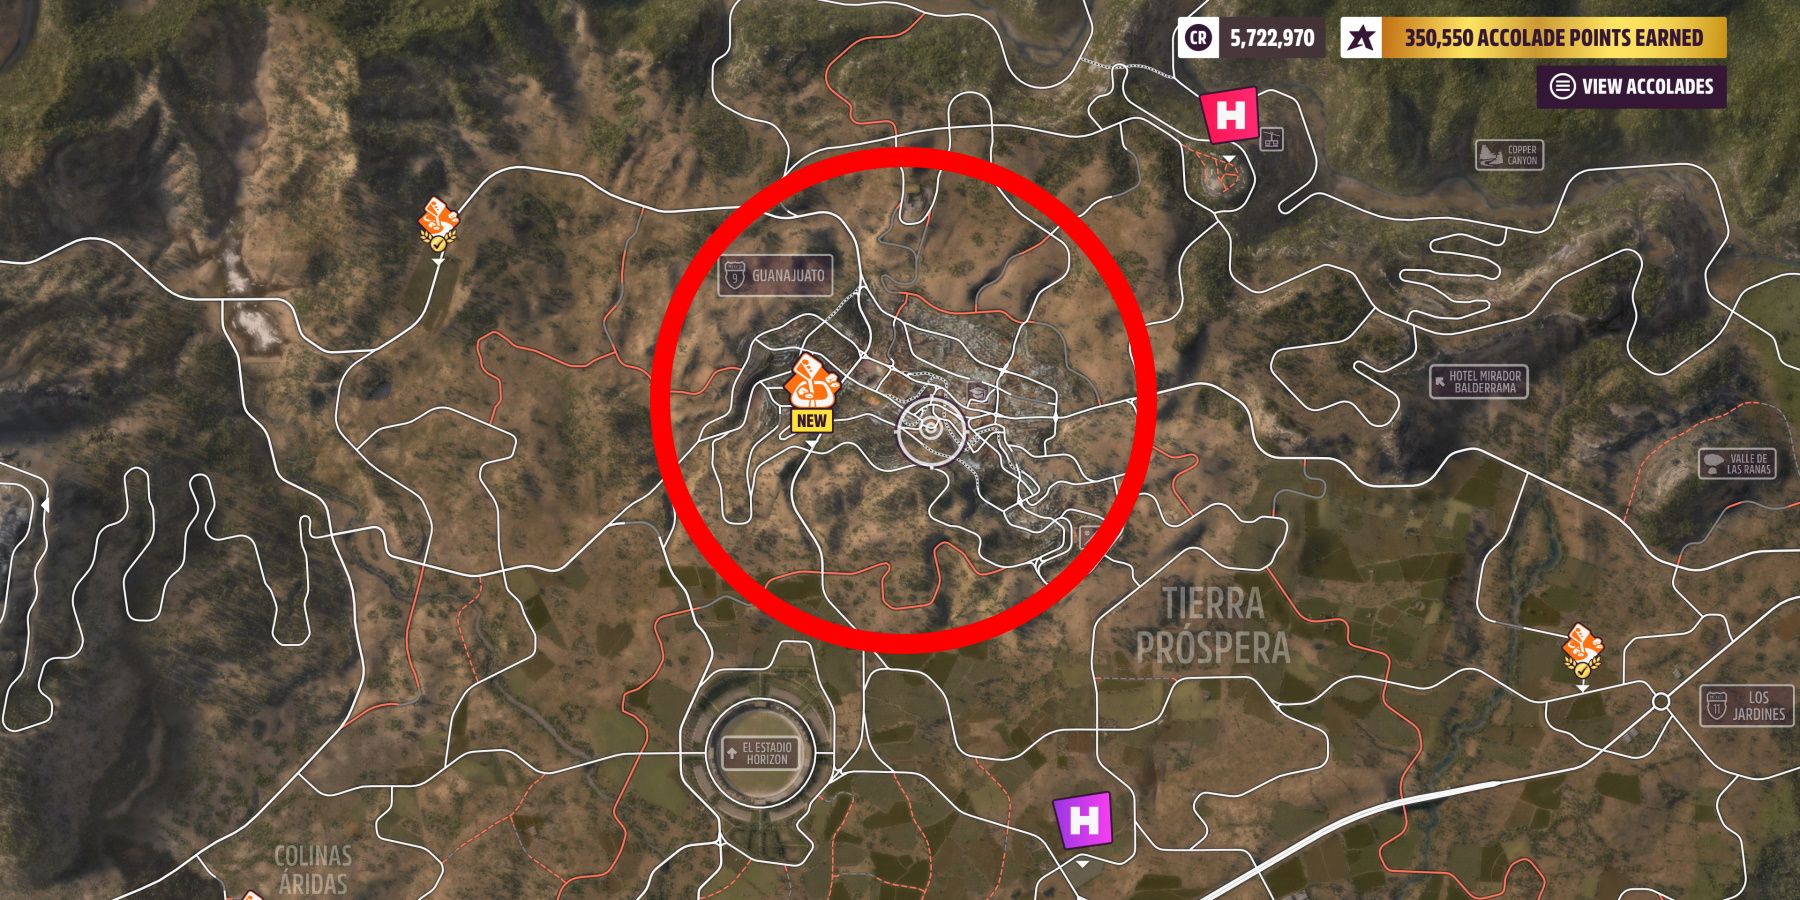 Guanajuato circled on Forza Horizon 5 map